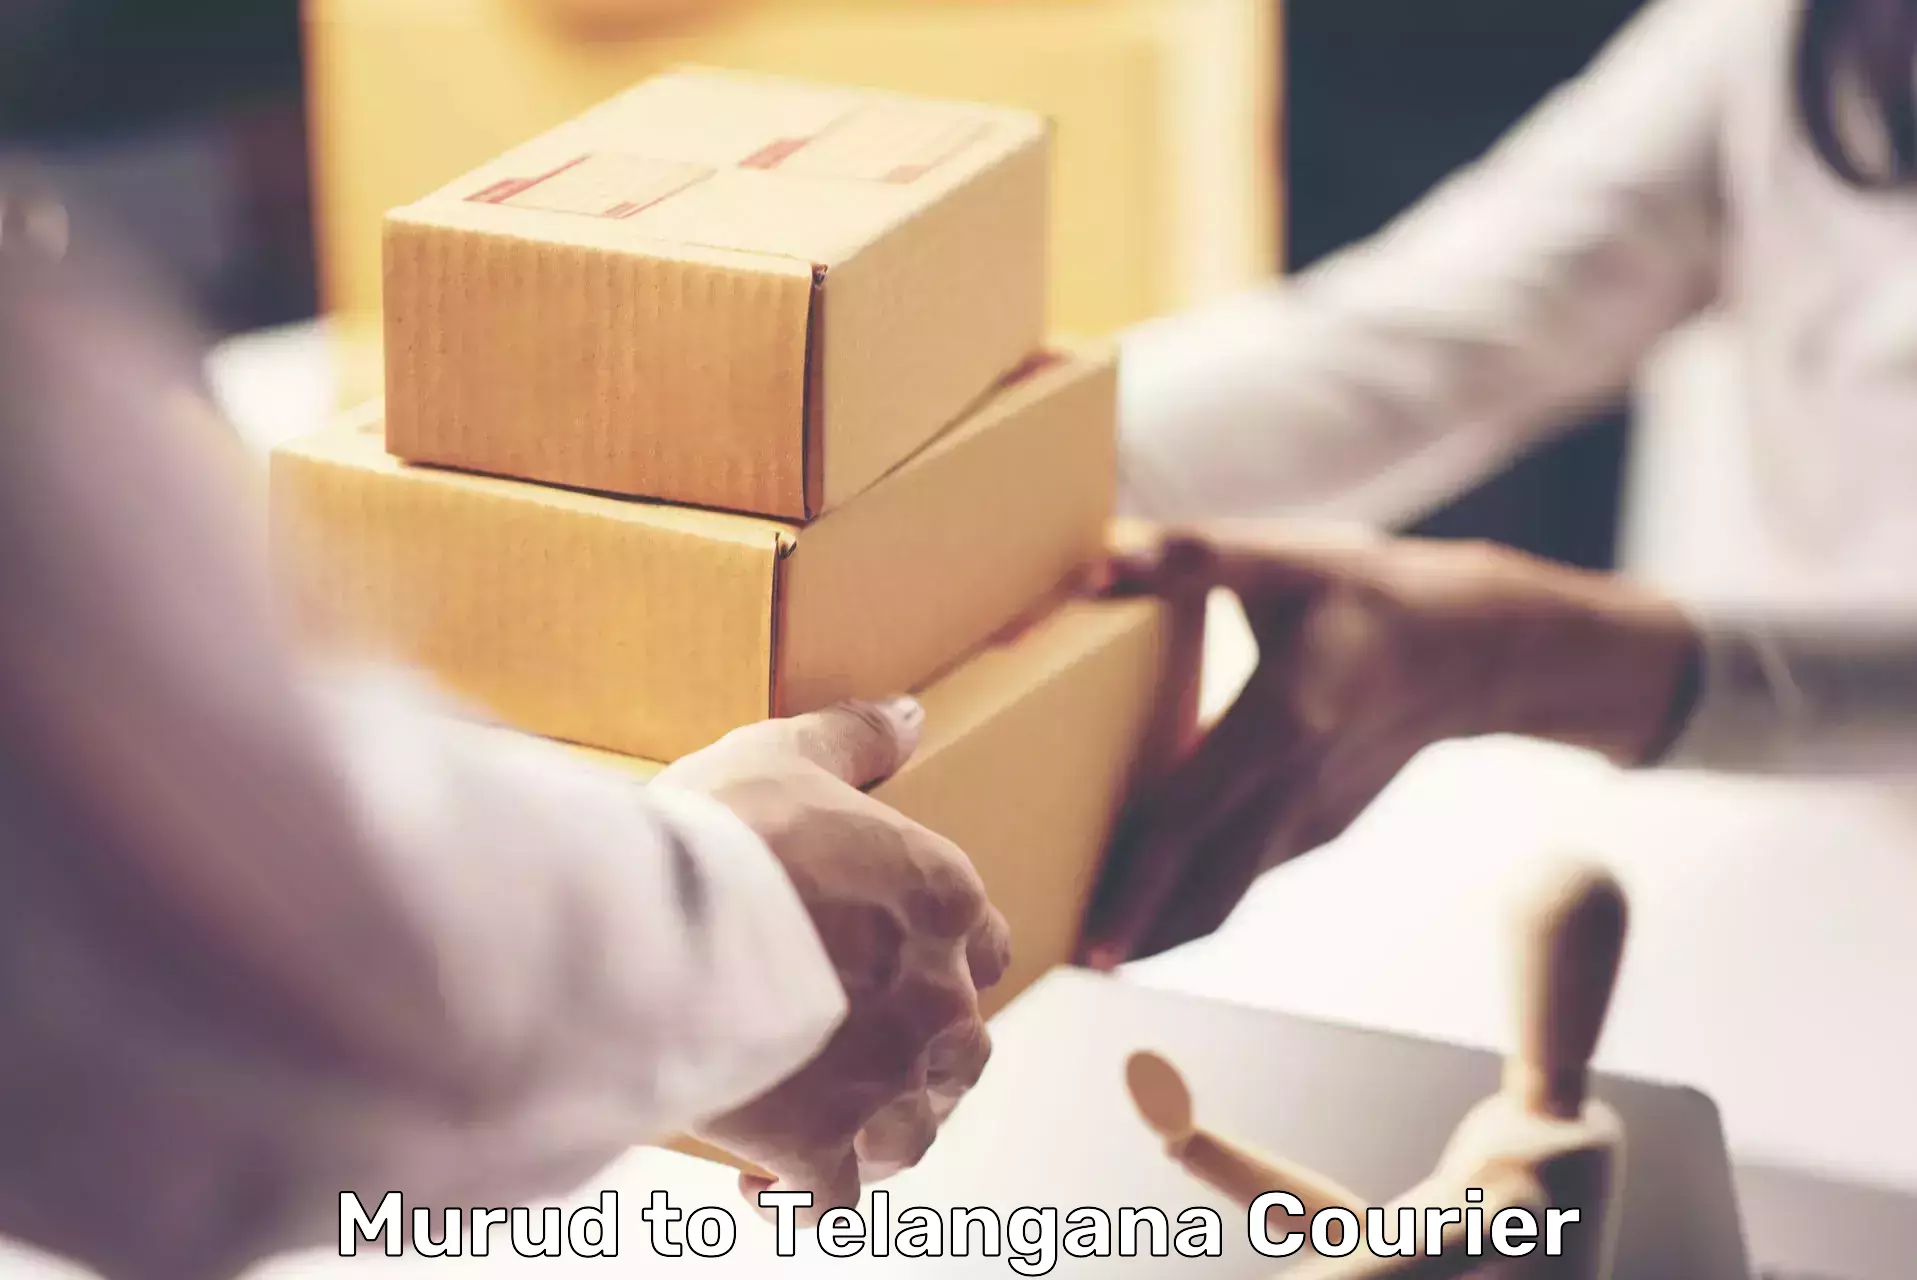 Delivery service partnership Murud to Thirumalagiri